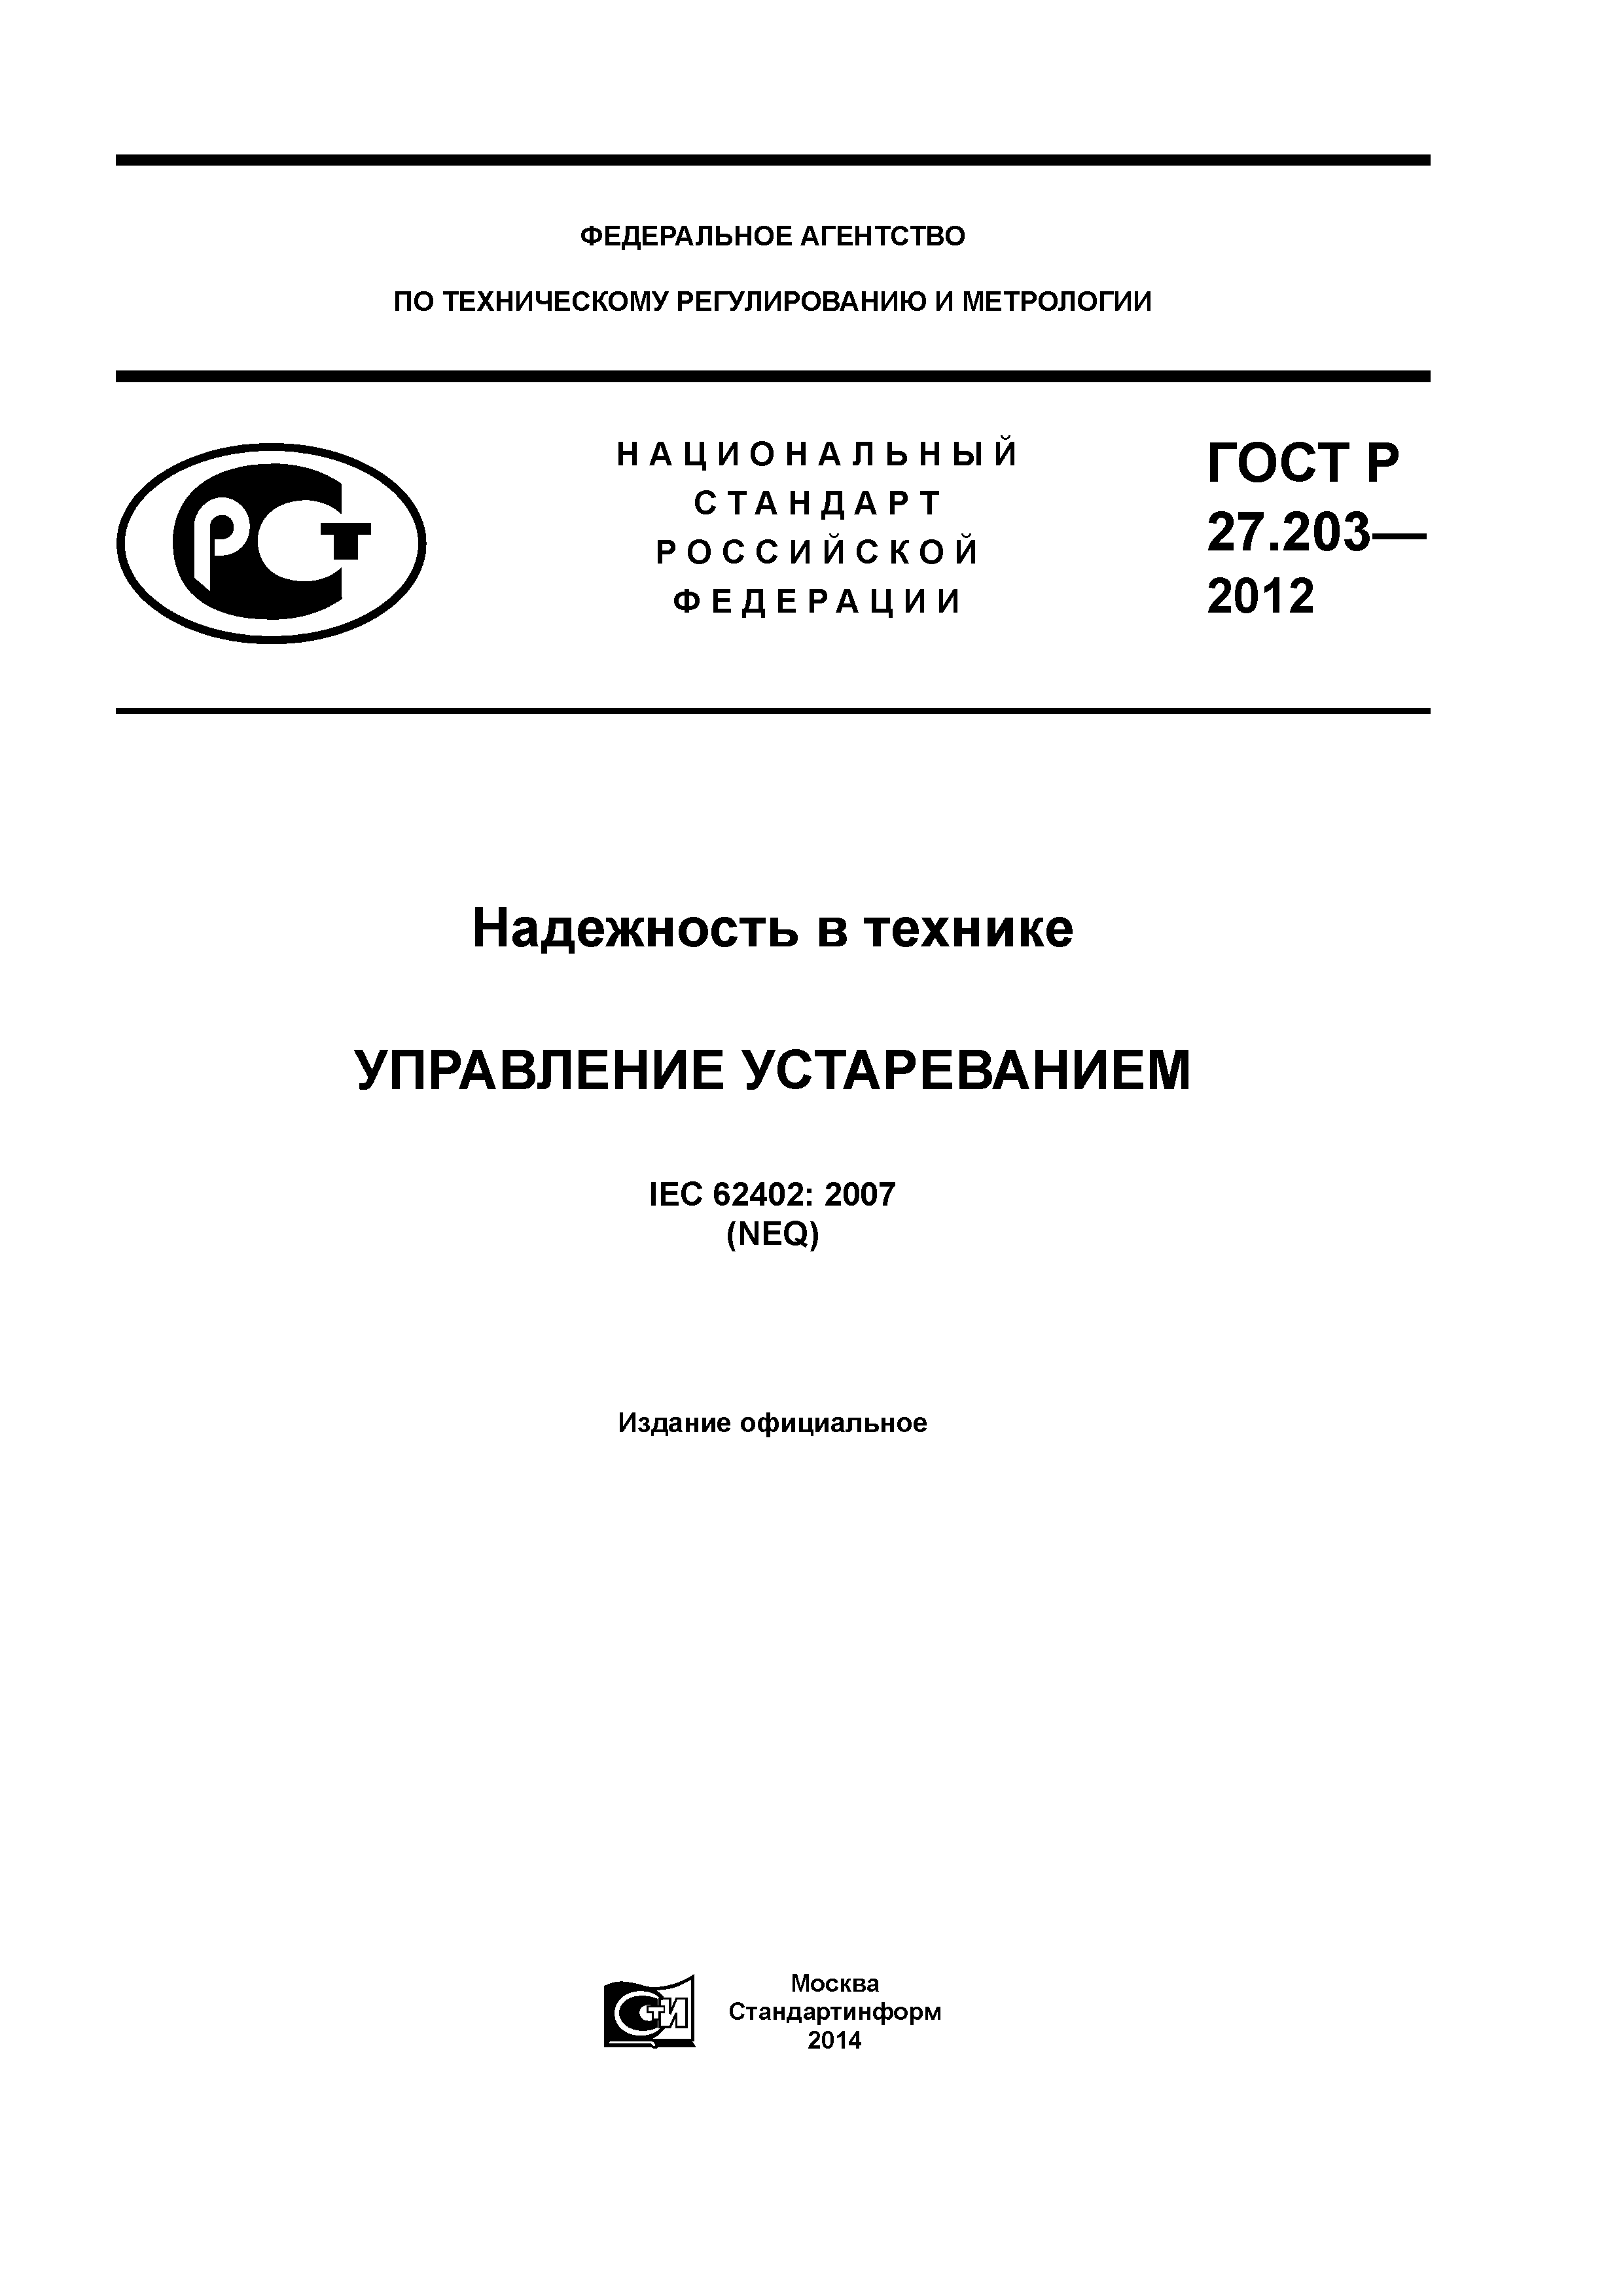 ГОСТ Р 27.203-2012